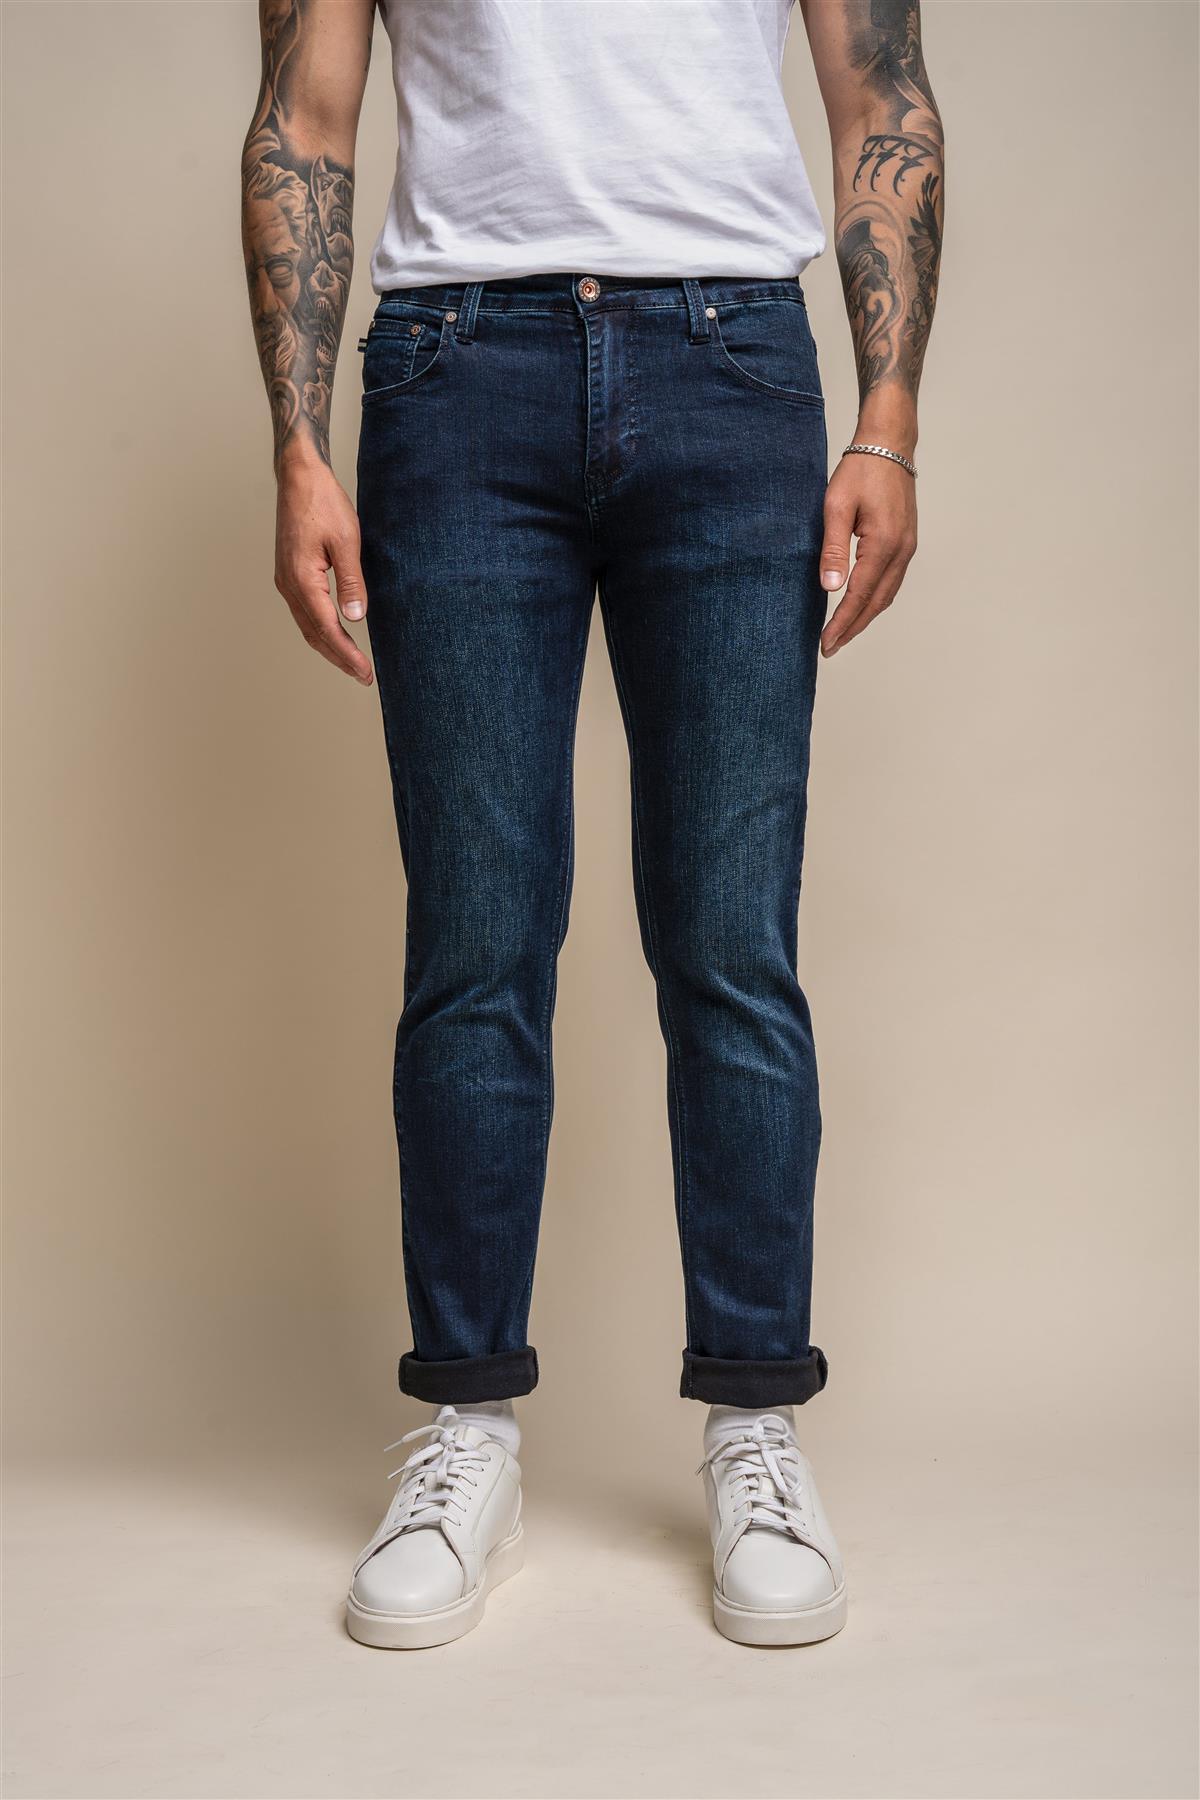 Elliot navy stretch slim fit jean front